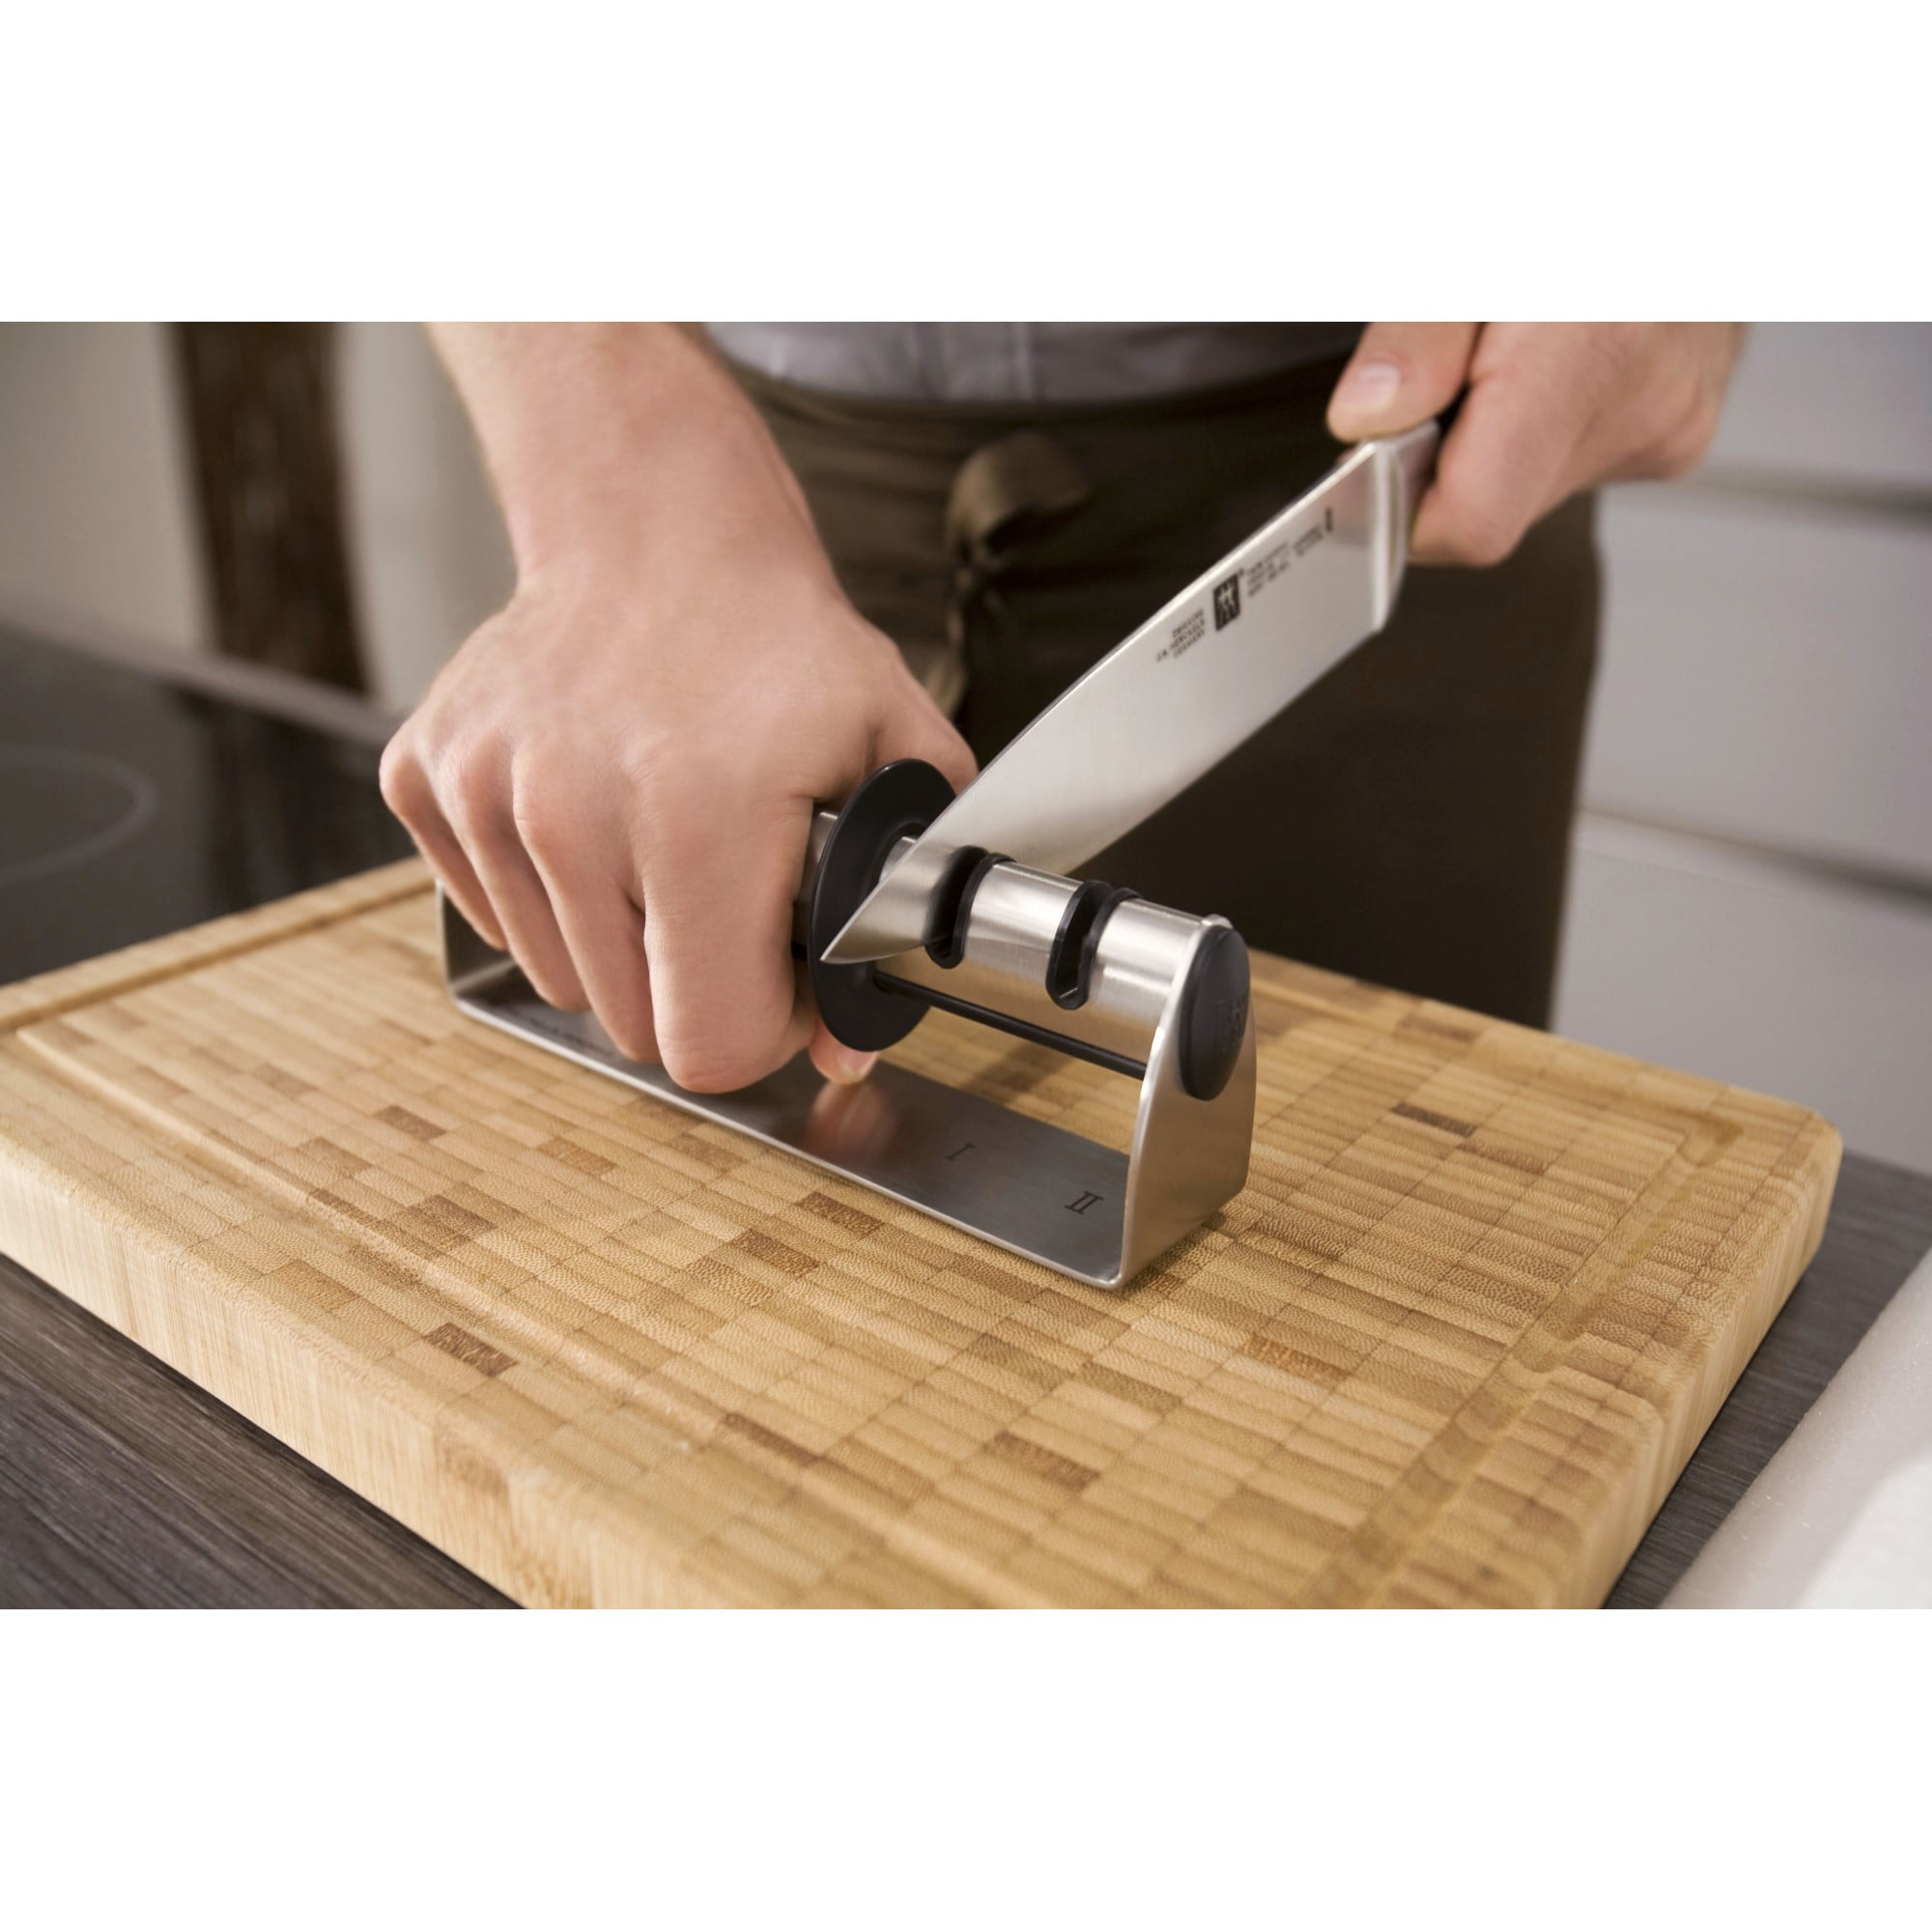 Henckels Edge Maintenance Handheld Knife Sharpener - horizontal packaging